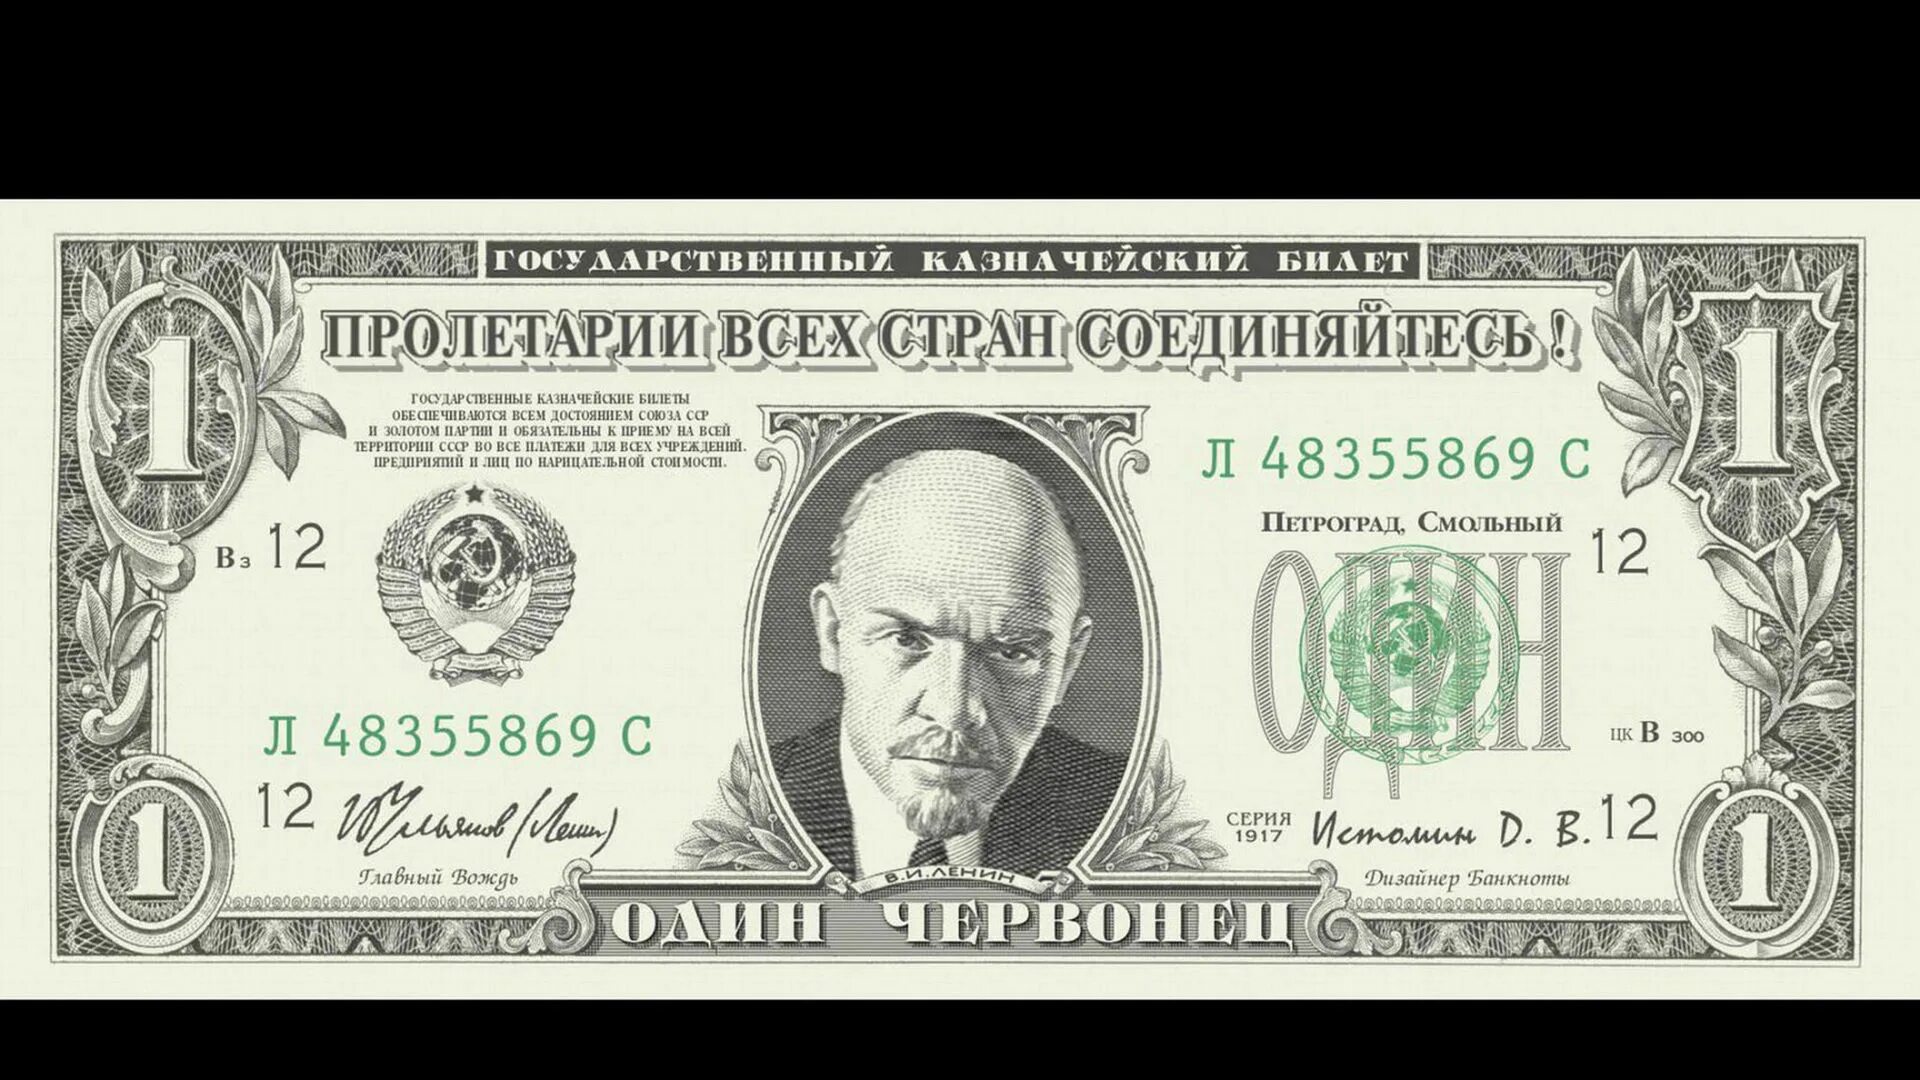 Купюра 1 доллар США. Американская купюра 1 доллар. 5 Долларовая купюра. Доллар с изображением Путина. 3 9 долларов